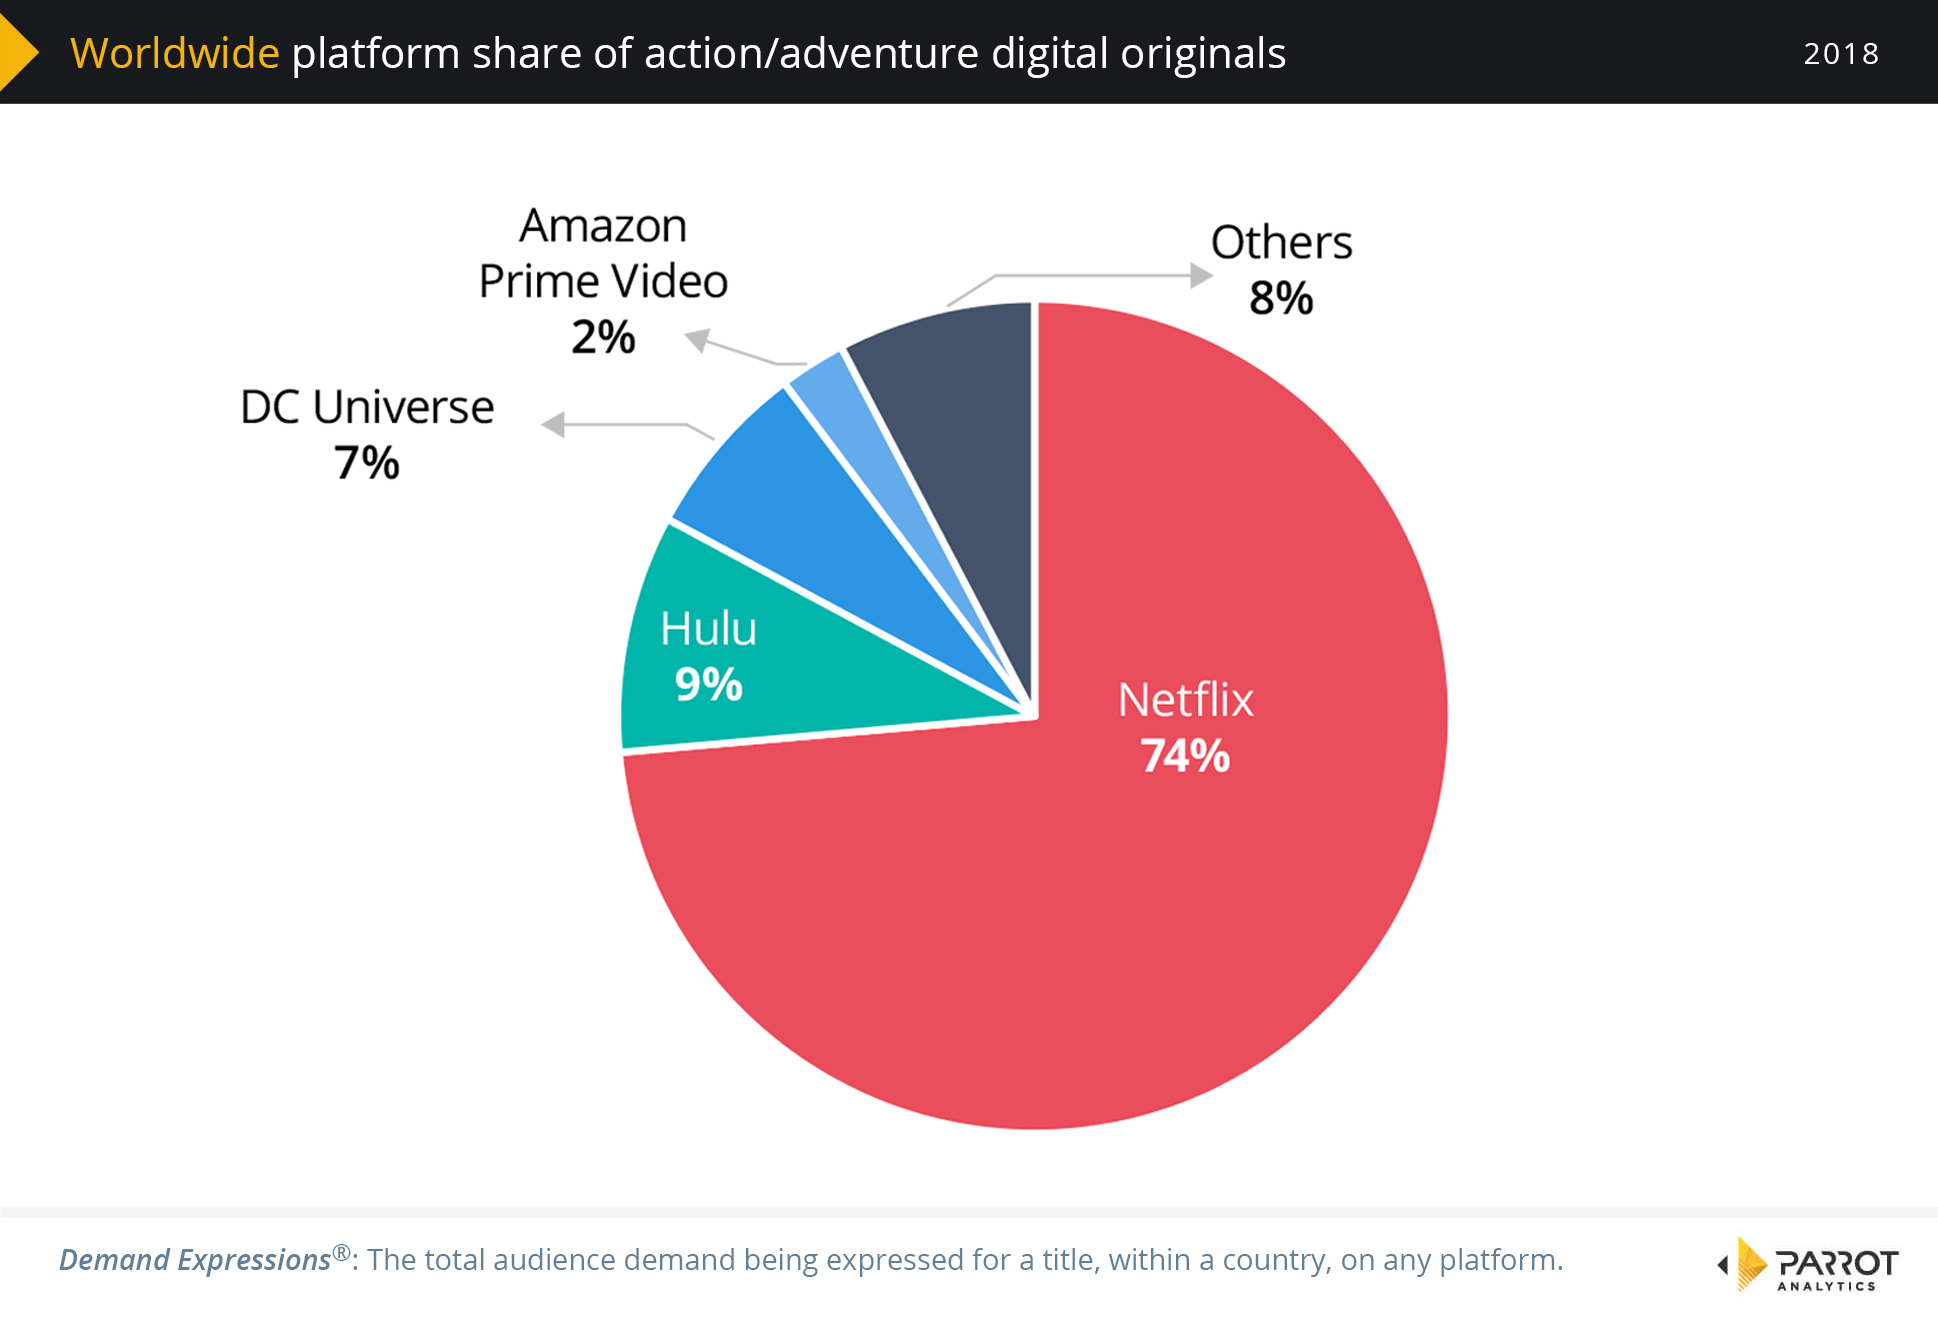 Global SVOD market share trends based on audience demand for digital originals Parrot Analytics